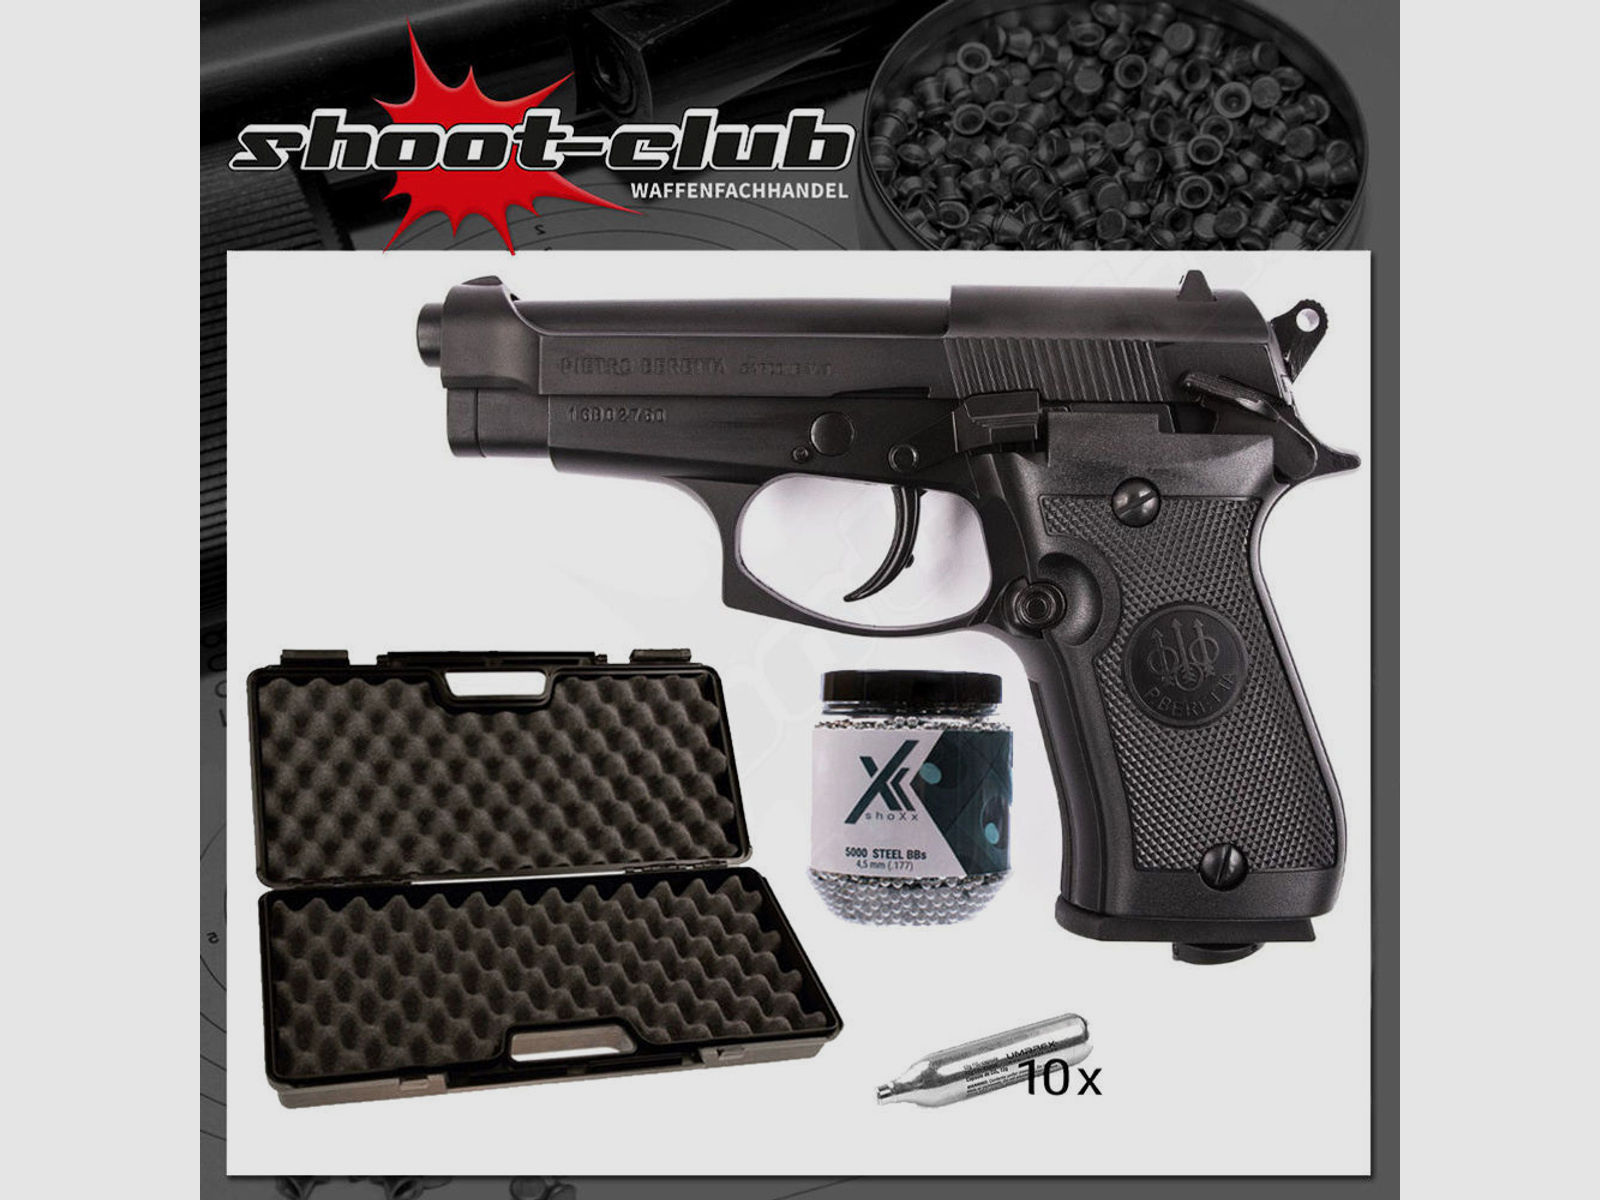 Beretta M84 FS CO2 Pistole 4,5 mm Stahl BBs schwarz - Koffer-Set